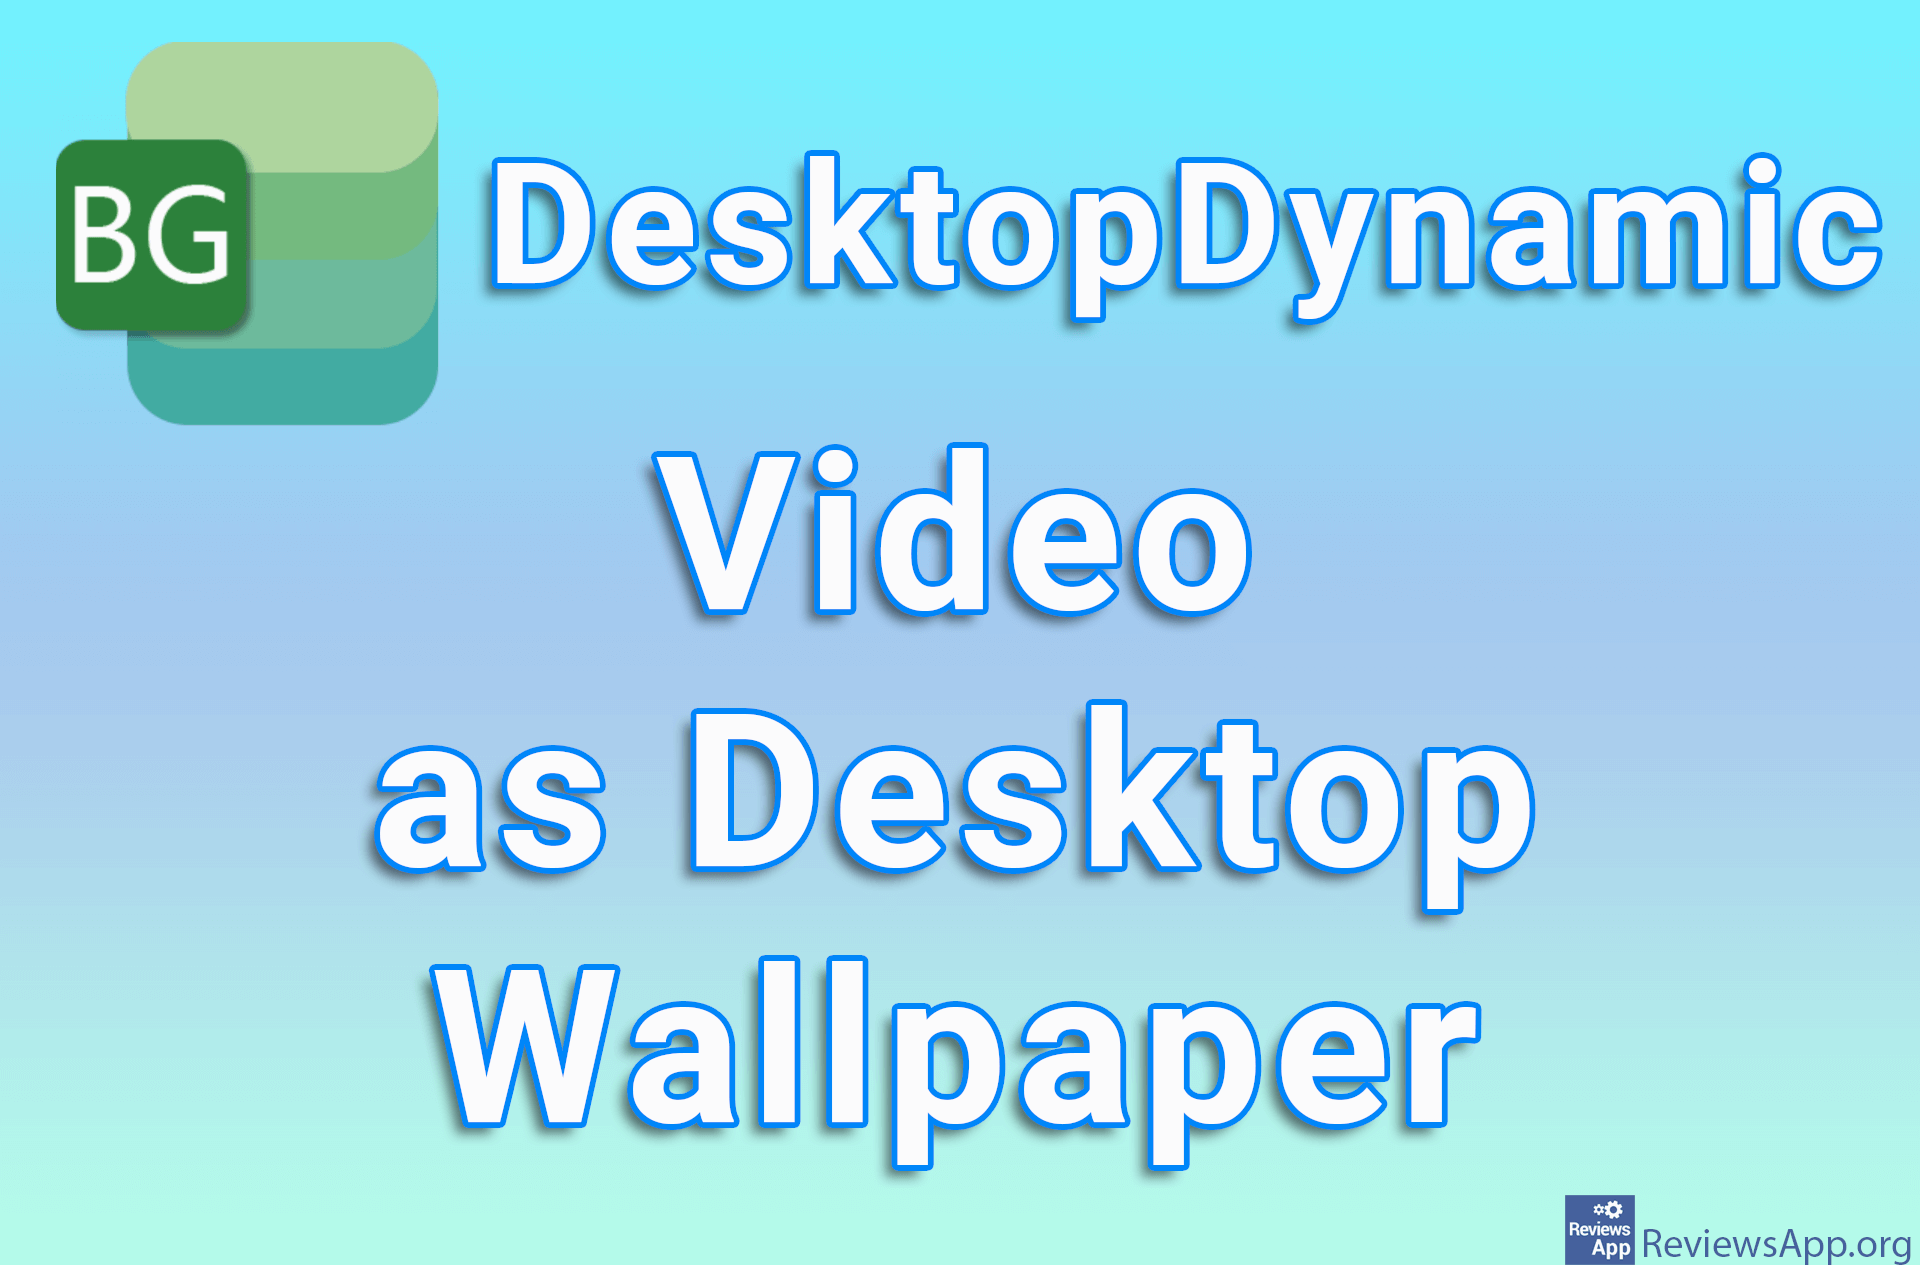 DesktopDynamic – Video as Desktop Wallpaper